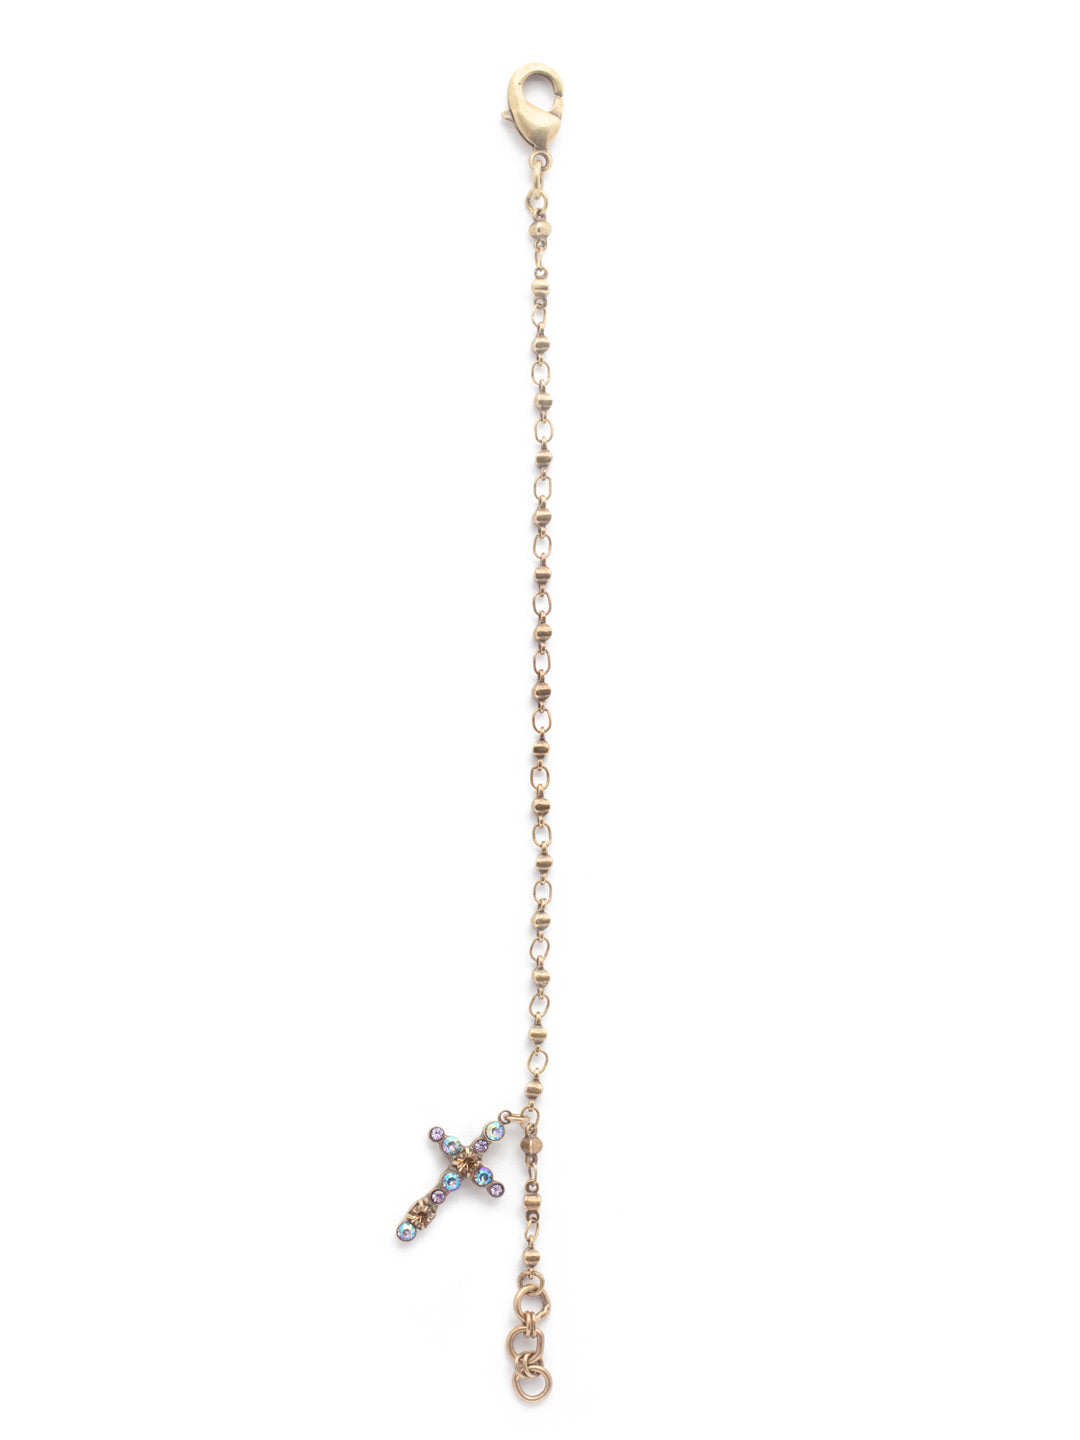 Product Image: Miley Cross Charm Bracelet